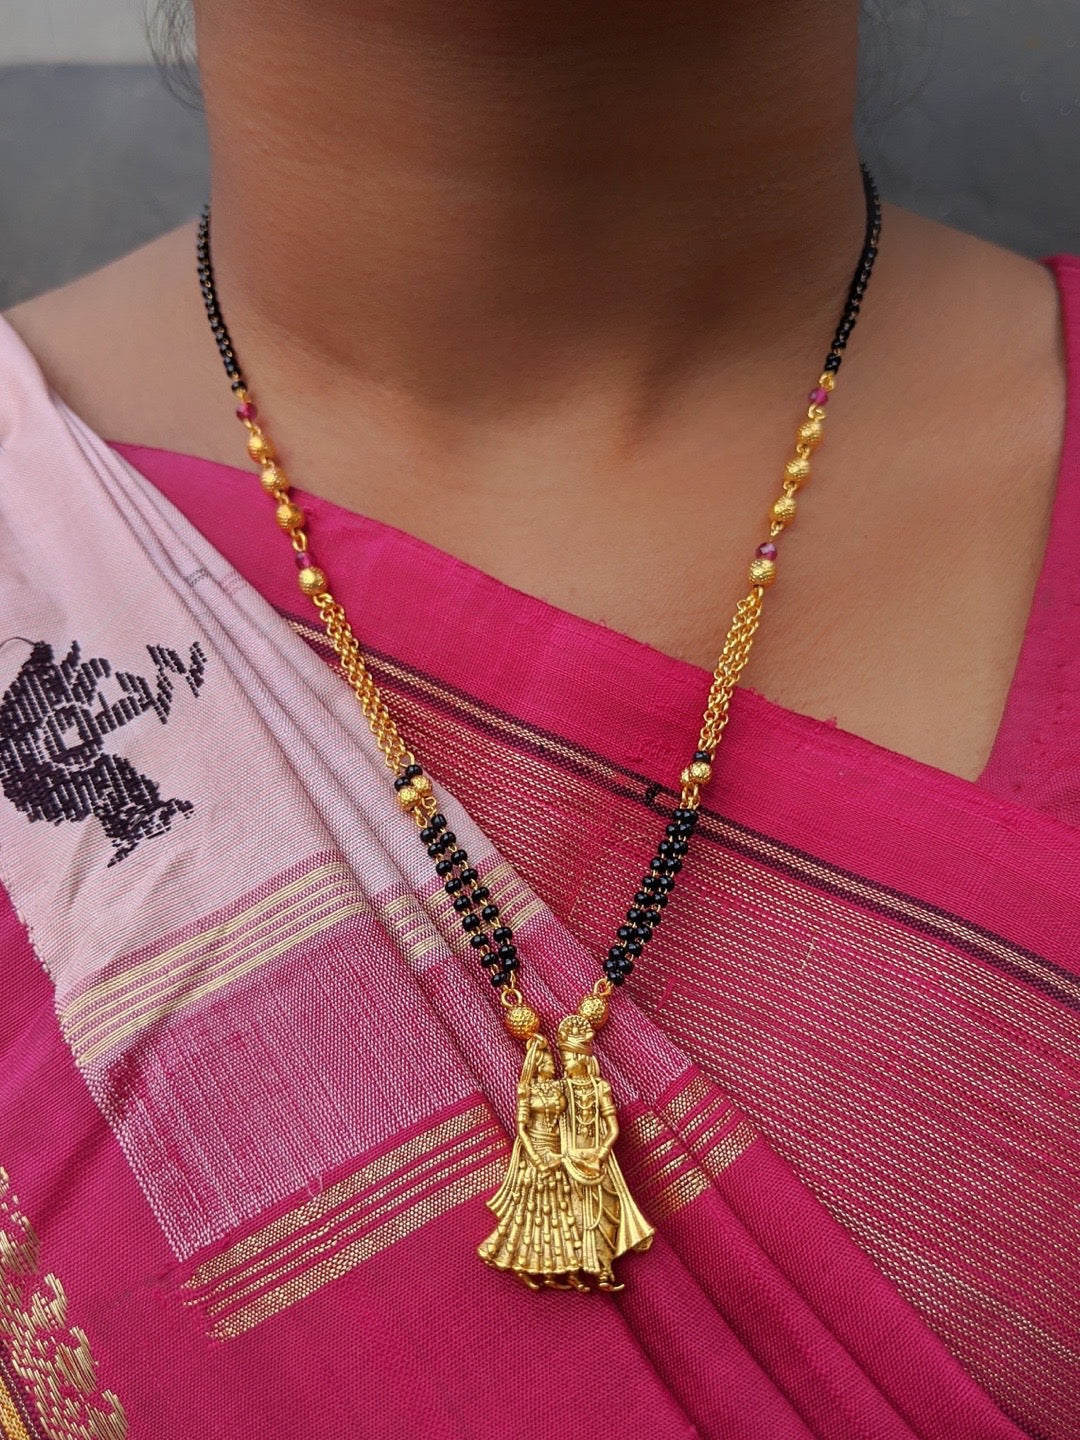 image for Short Mangalsutra Designs Lord Radha Krishna pendant bridal gold mangalsutra black gold beads chain